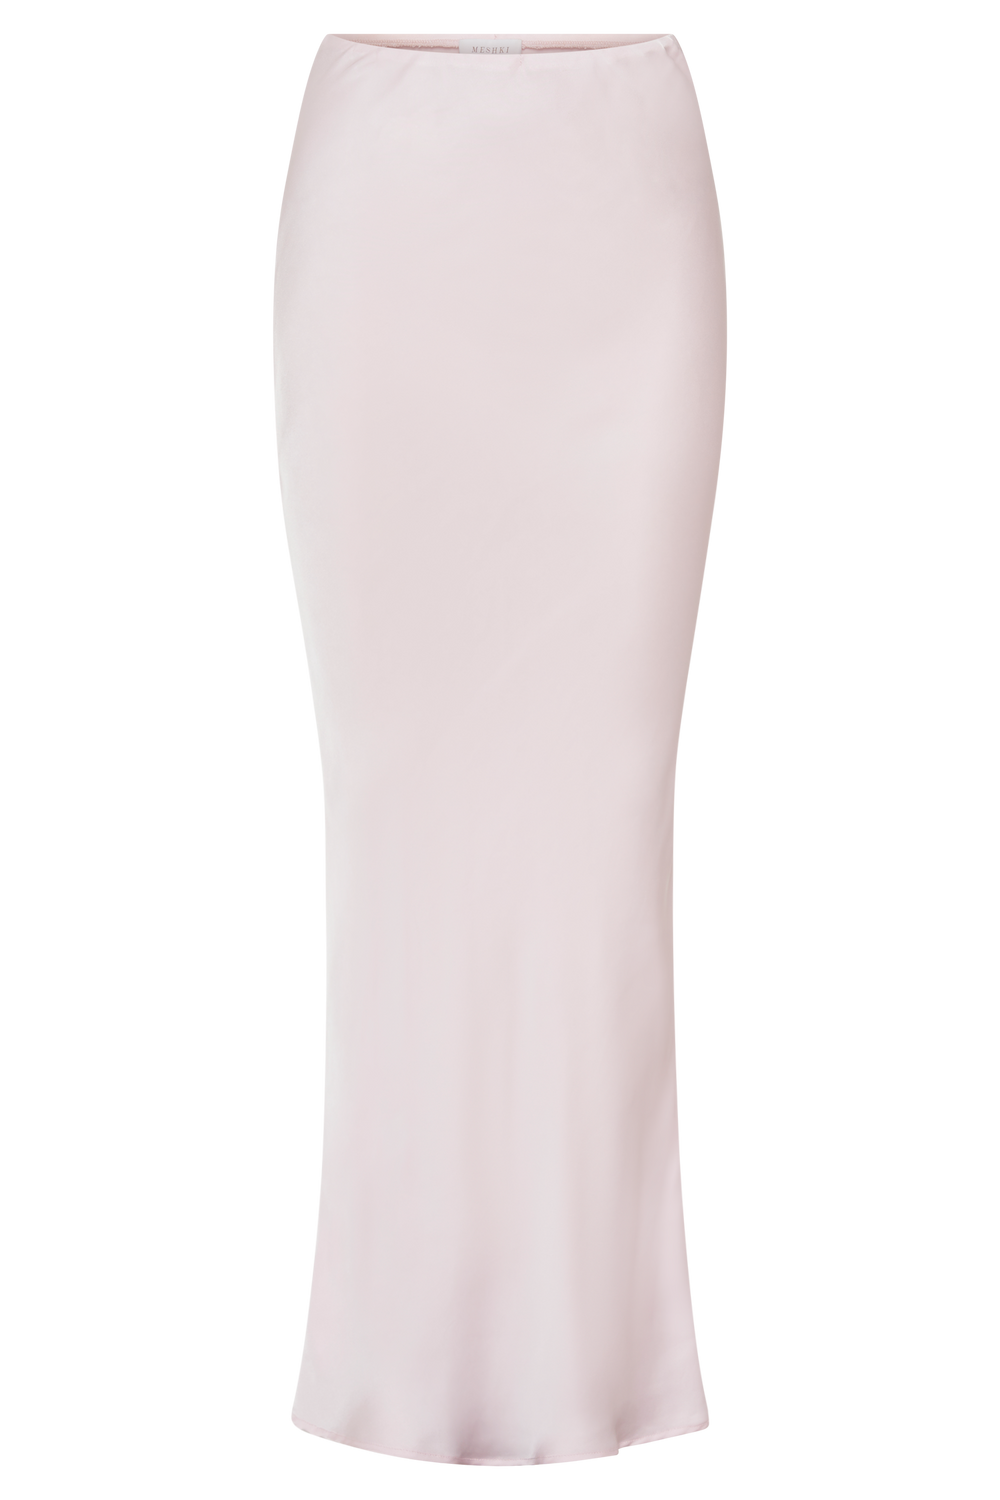 Violeta Satin Maxi Skirt - Fairy Floss Pink